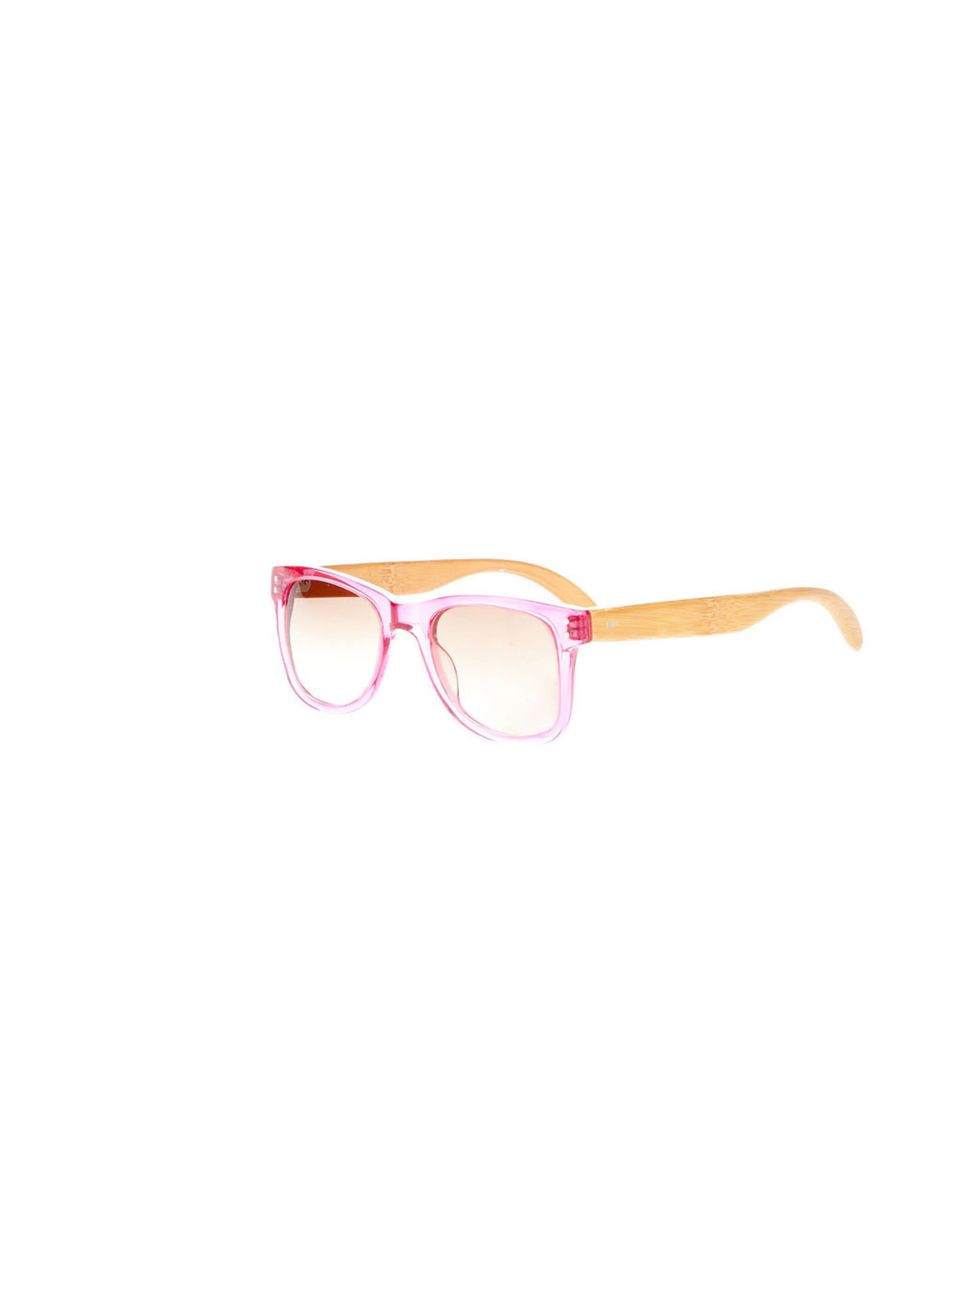 <p>Plastichic transparent pink sunglasses, £78, at Farfetch</p><p><a href="http://shopping.elleuk.com/browse?fts=plastichic+pink+sunglasses">BUY NOW</a></p>